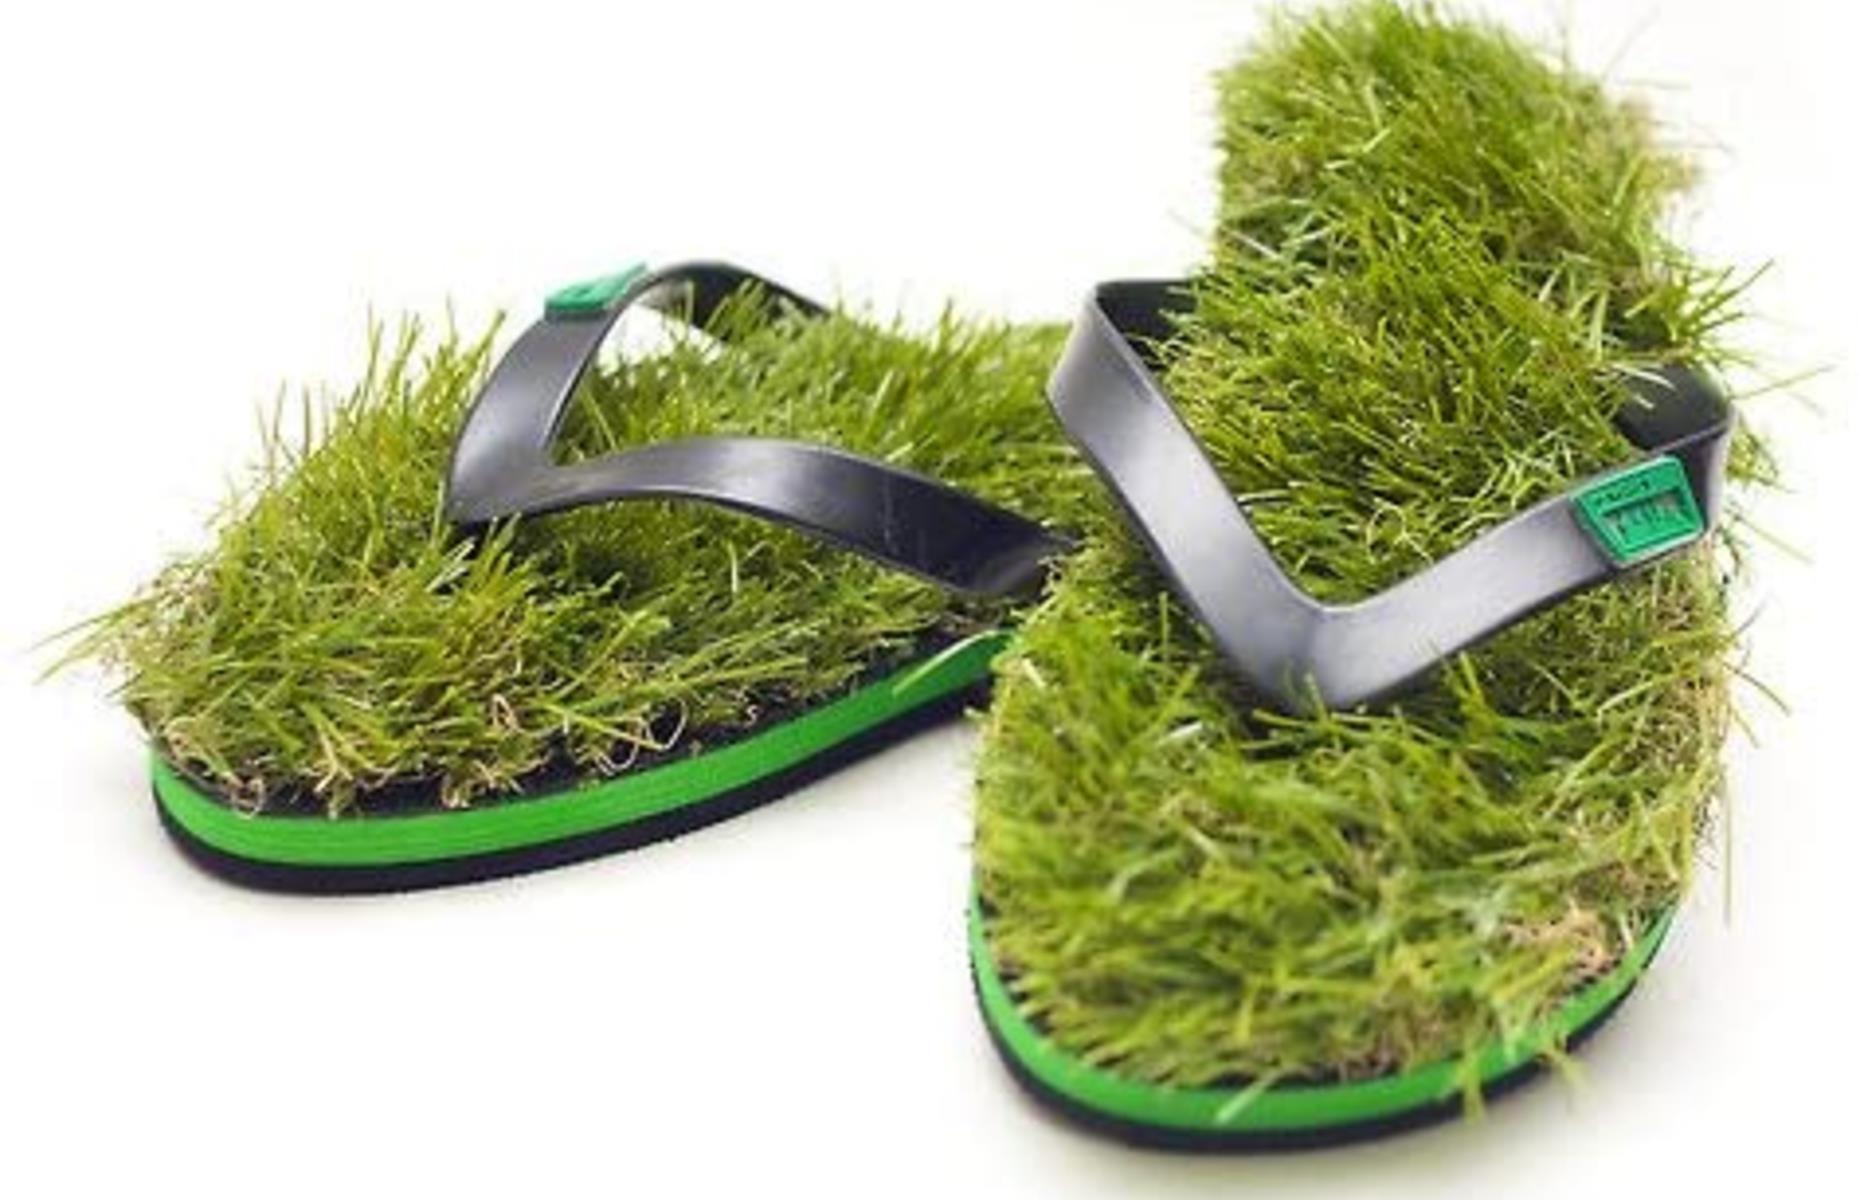 KUSA flip flops – puts the grass between your toes